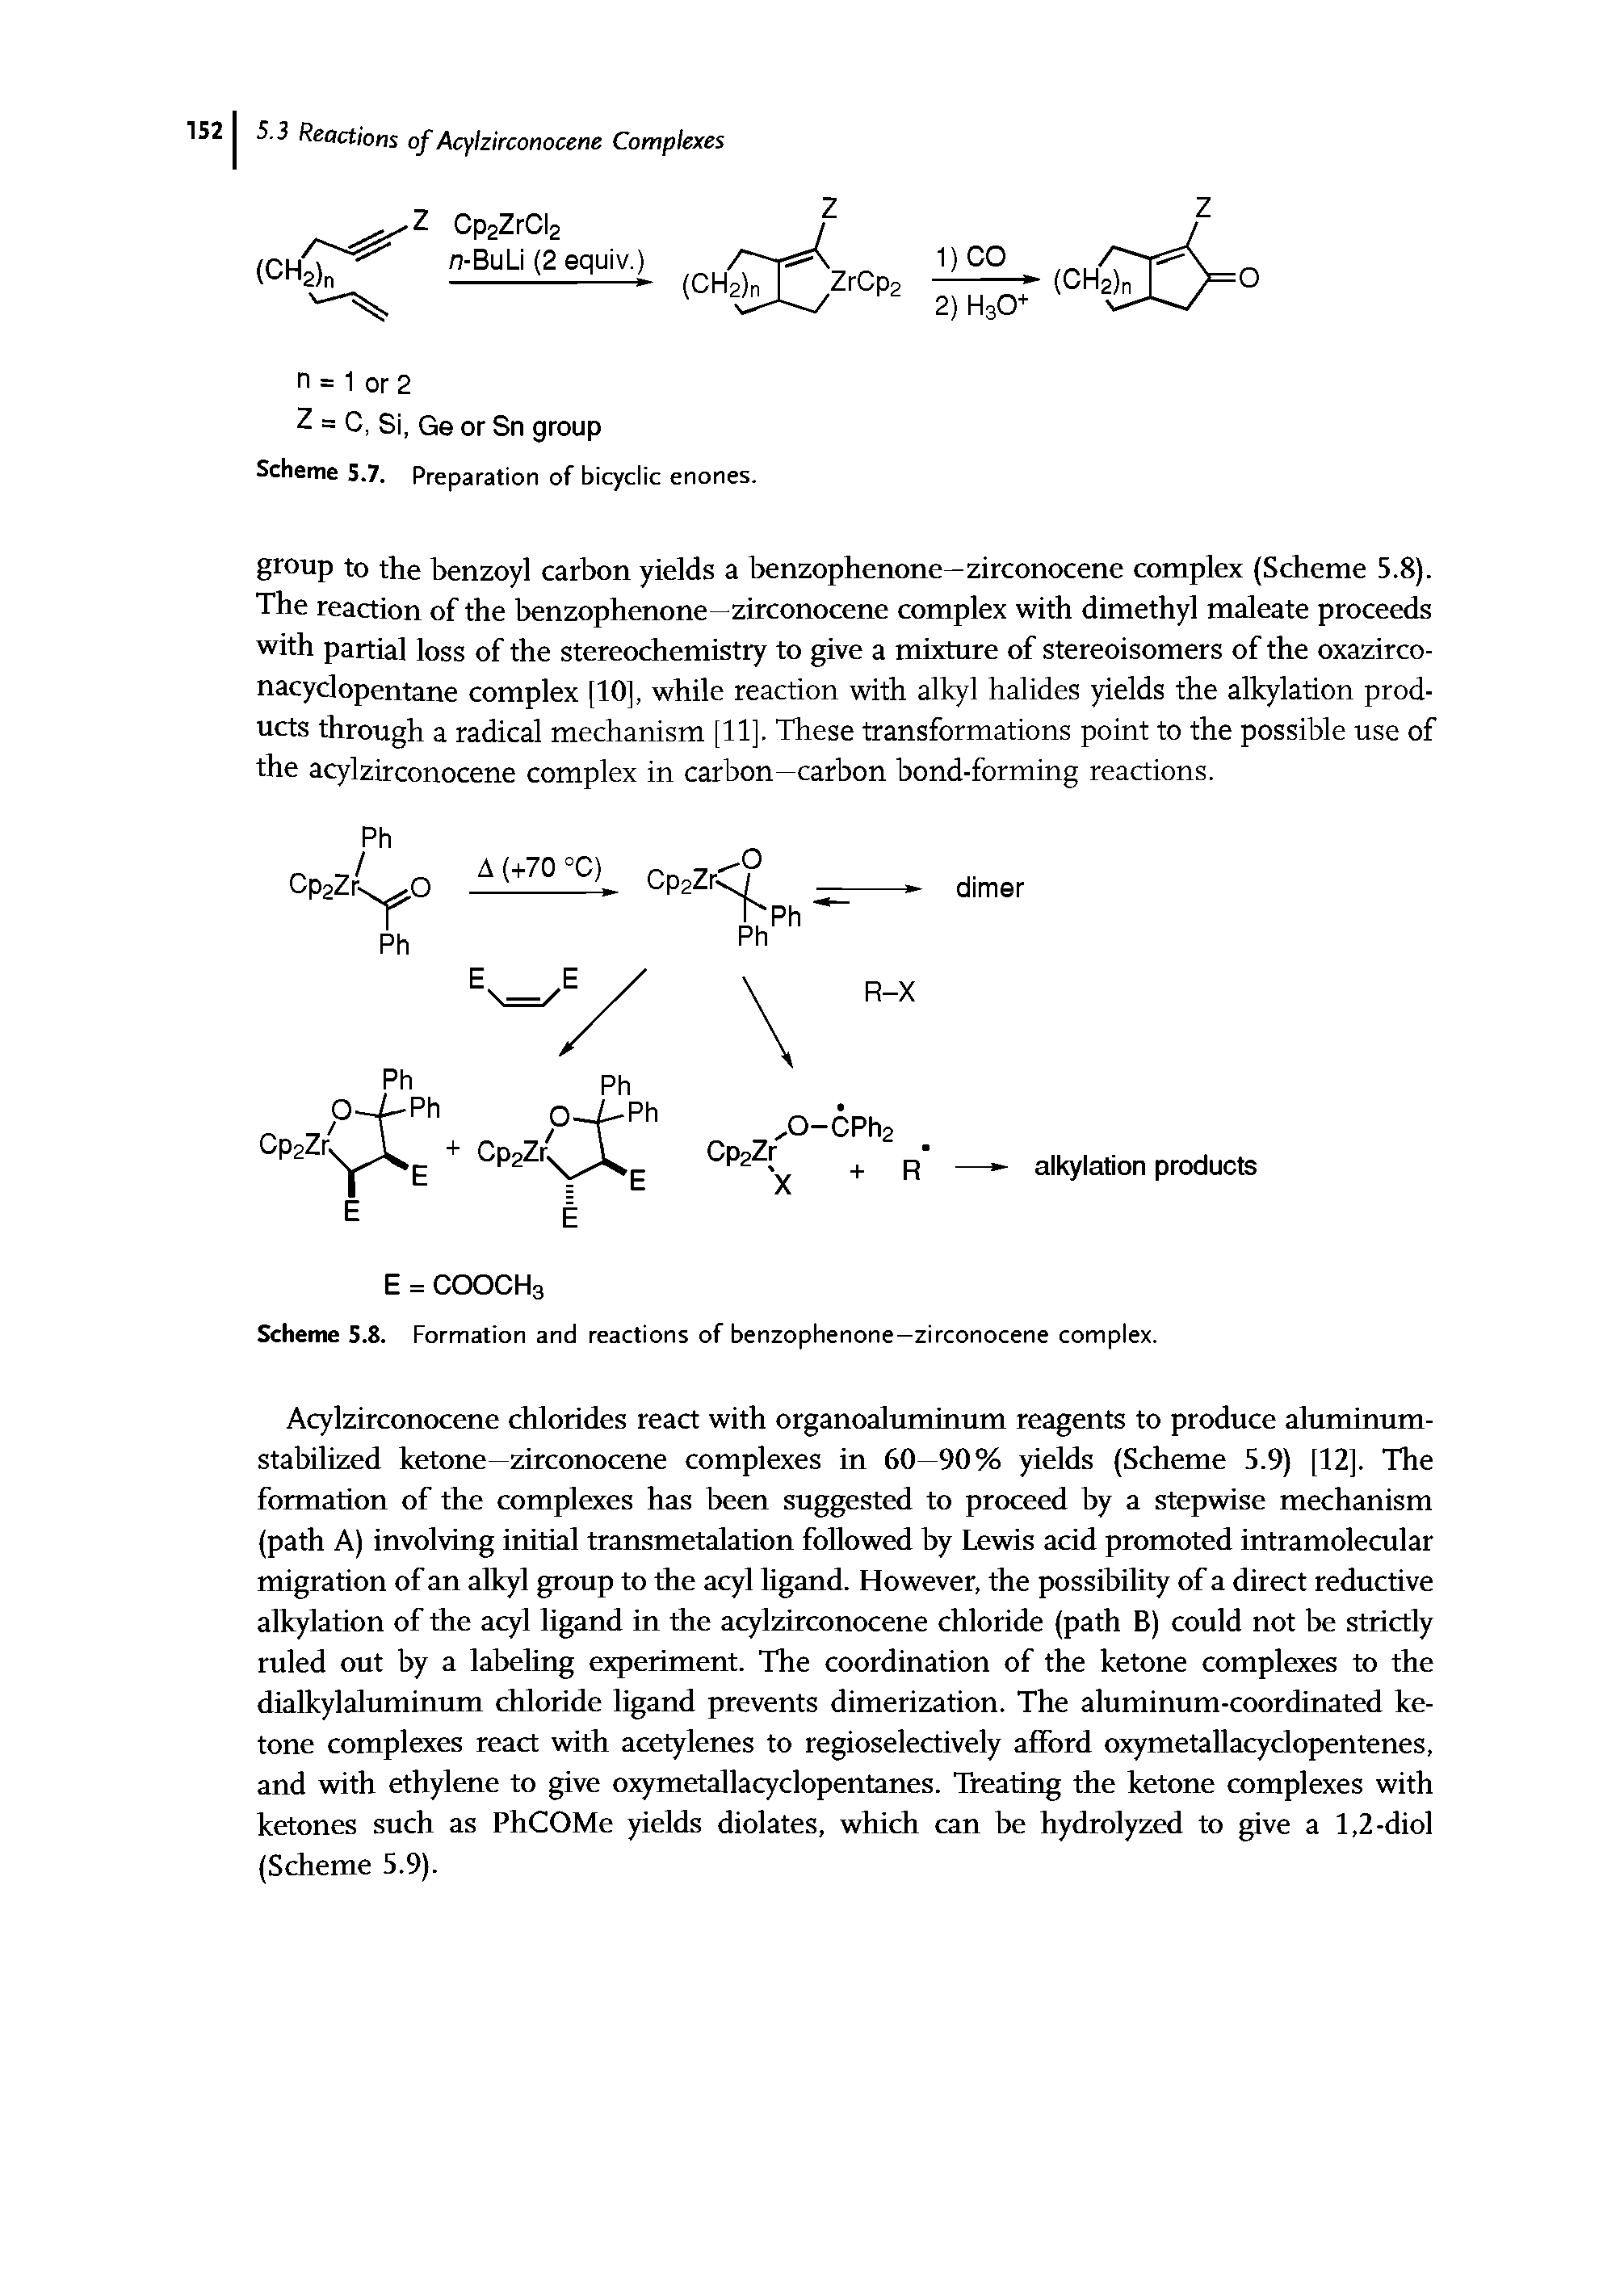 Scheme 5.8. Formation and reactions of benzophenone-zirconocene complex.